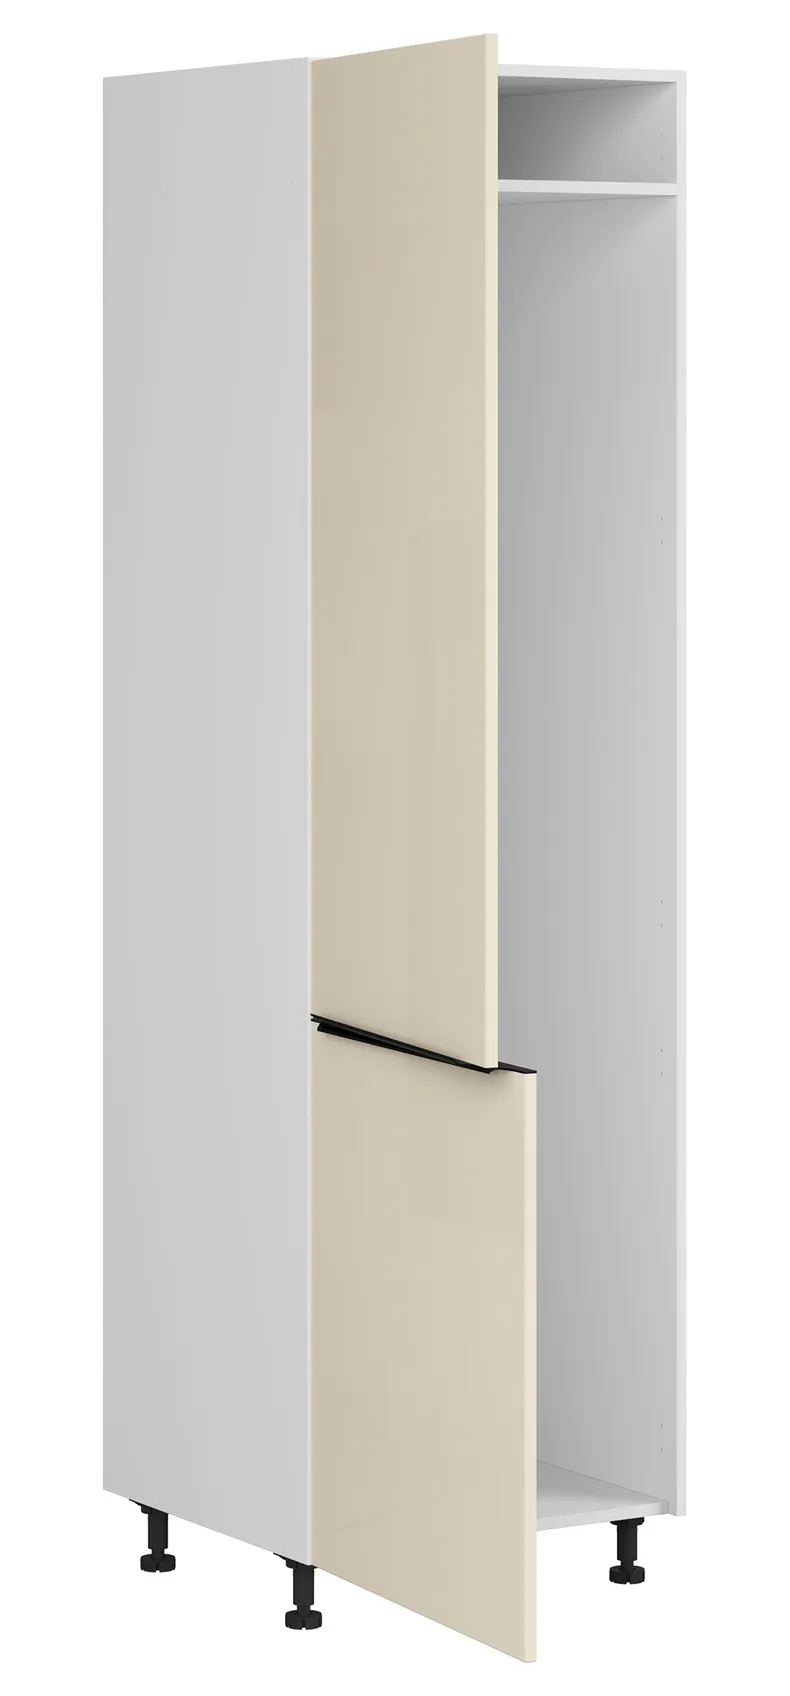 BRW Кухонный шкаф Sole L6 60 см левосторонний для установки холодильника магнолия жемчуг, альпийский белый/жемчуг магнолии FM_DL_60/207_L/L-BAL/MAPE фото №3